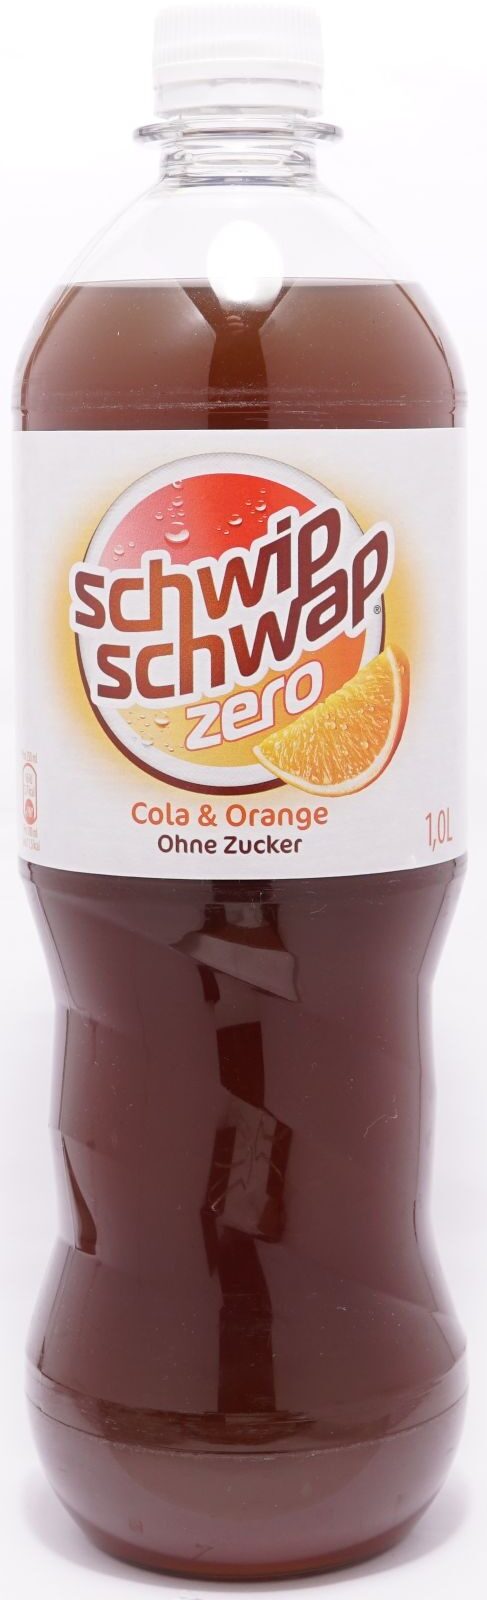 værdig Forbedring lettelse Schwip Schwap Zero - Pepsi - 1 l